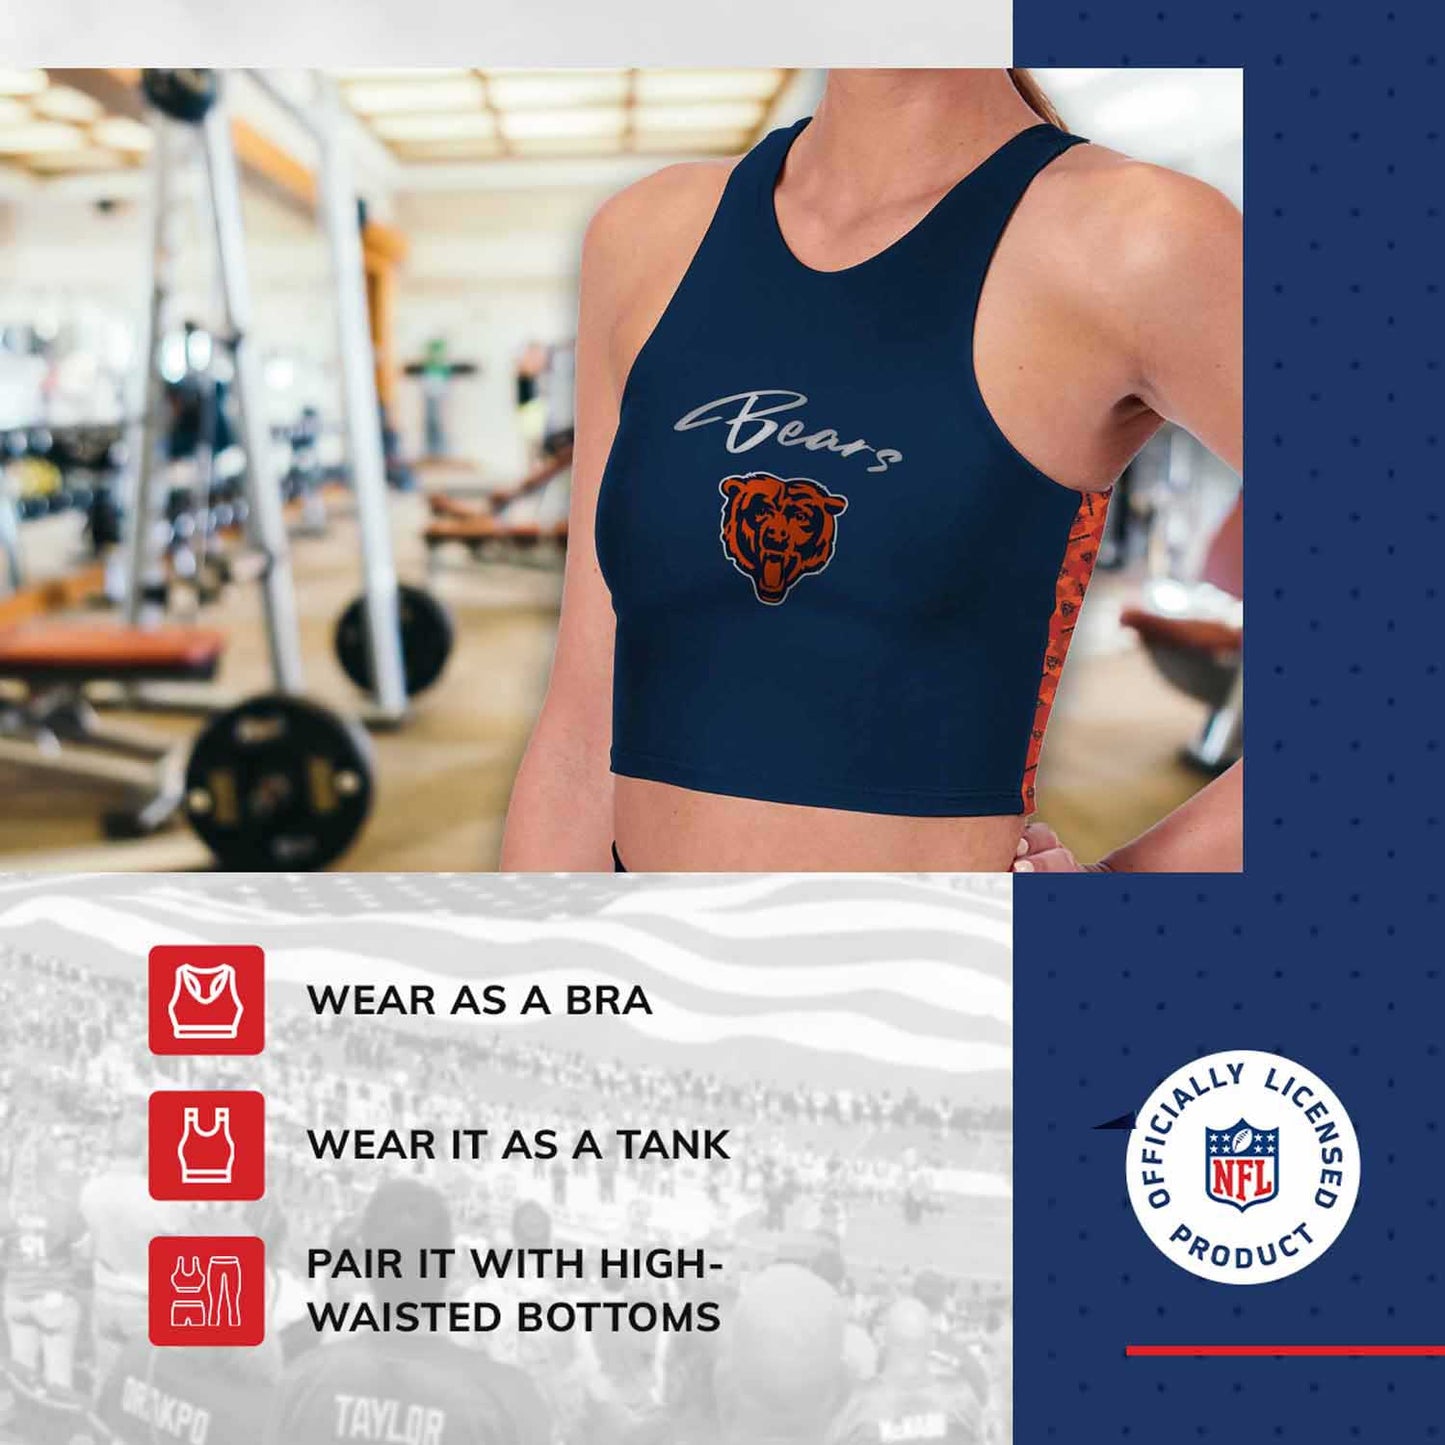 Chicago Bears NFL Women's Sports Bra Activewear - Navy